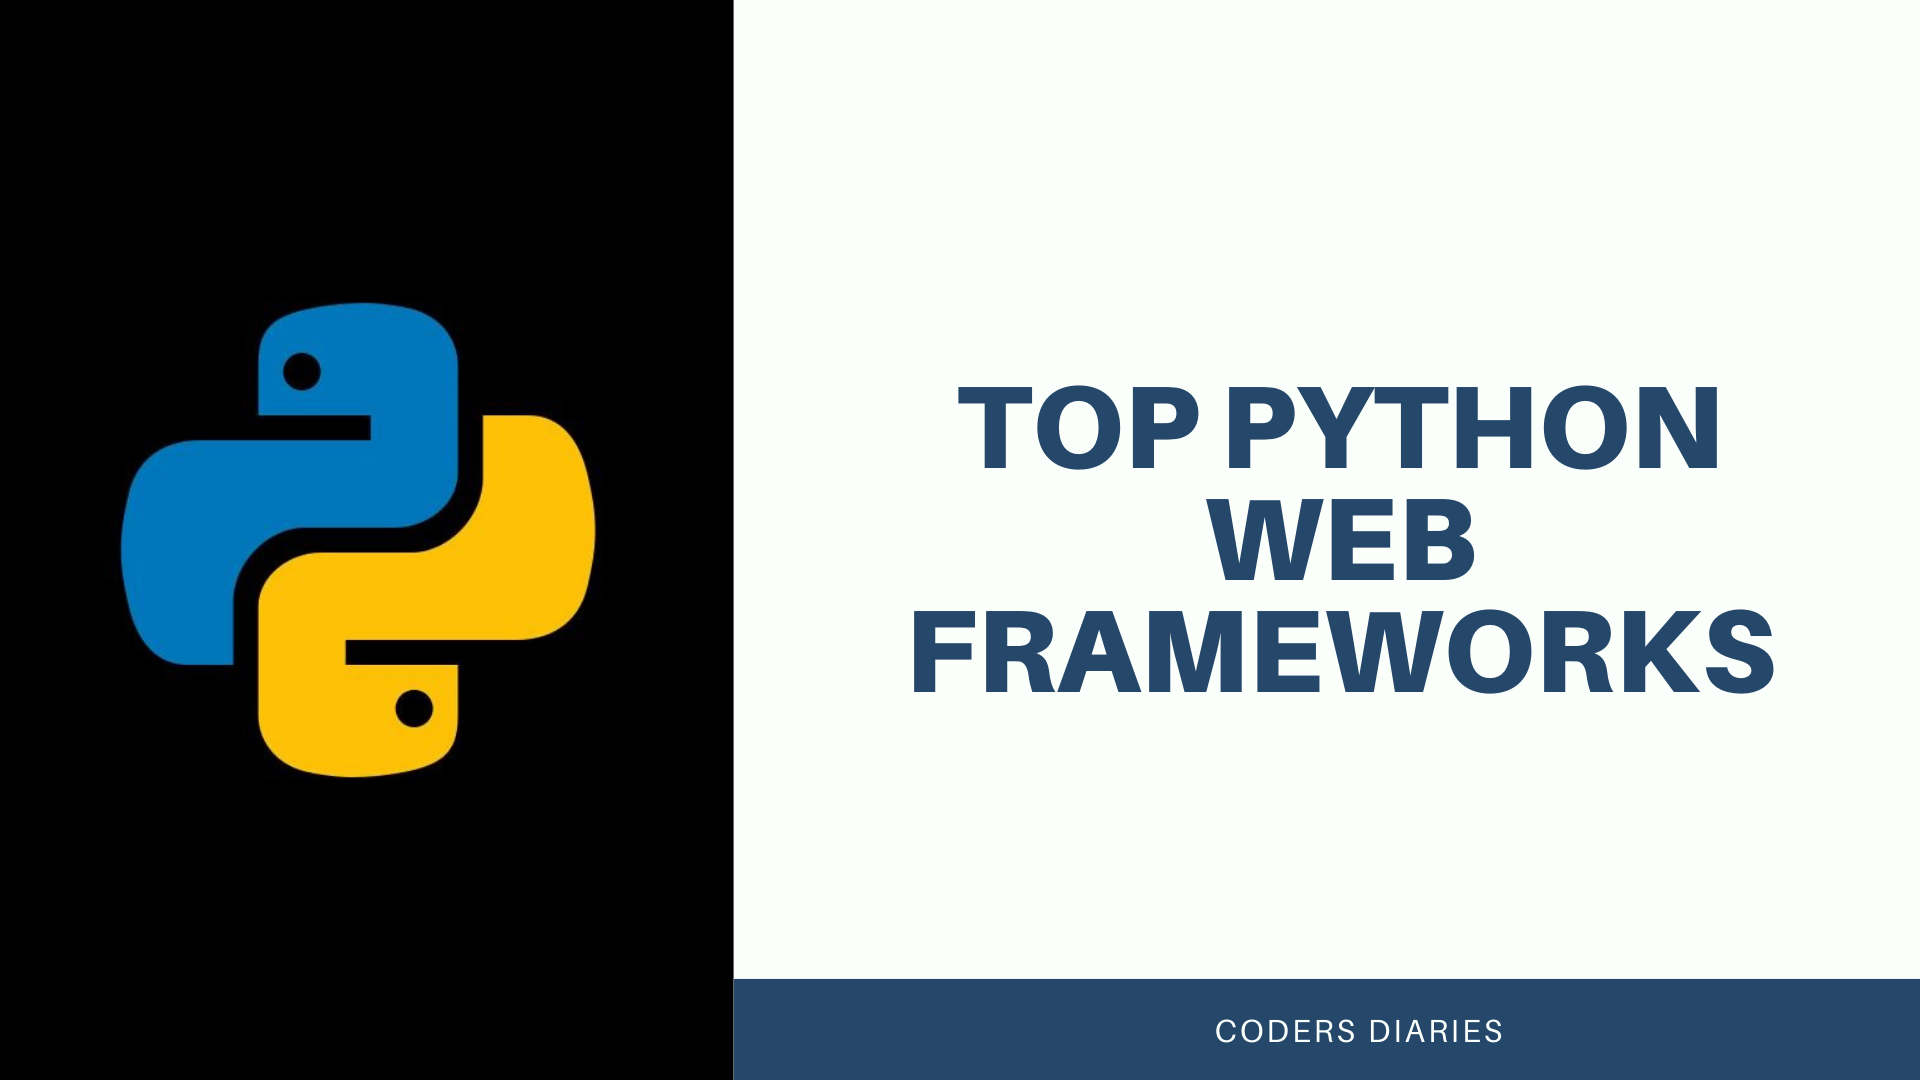 Top python web frameworks | Is python still a choice in 2021